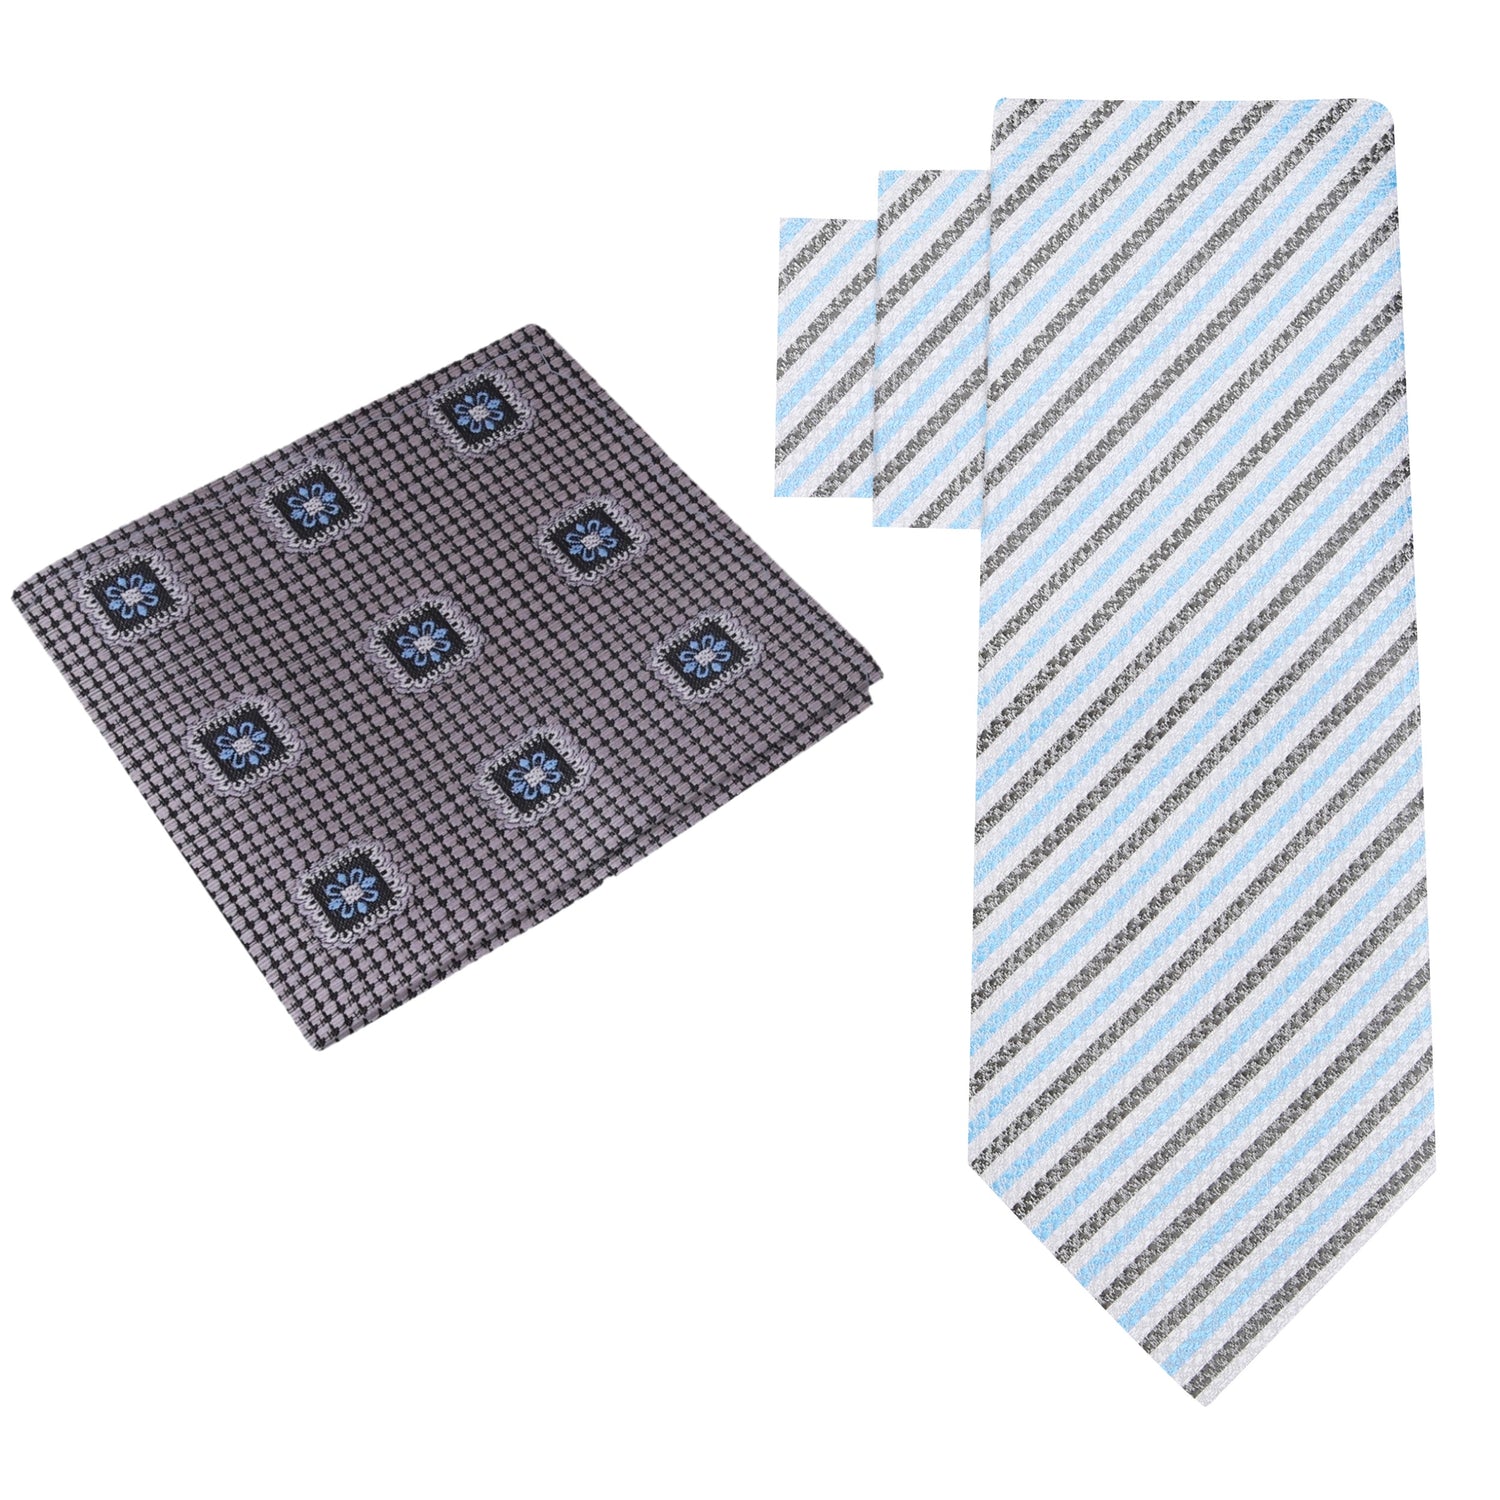 Alt View: White, Light Blue, Charcoal Stripe Necktie & Grey, Blue and Black Geometric Square